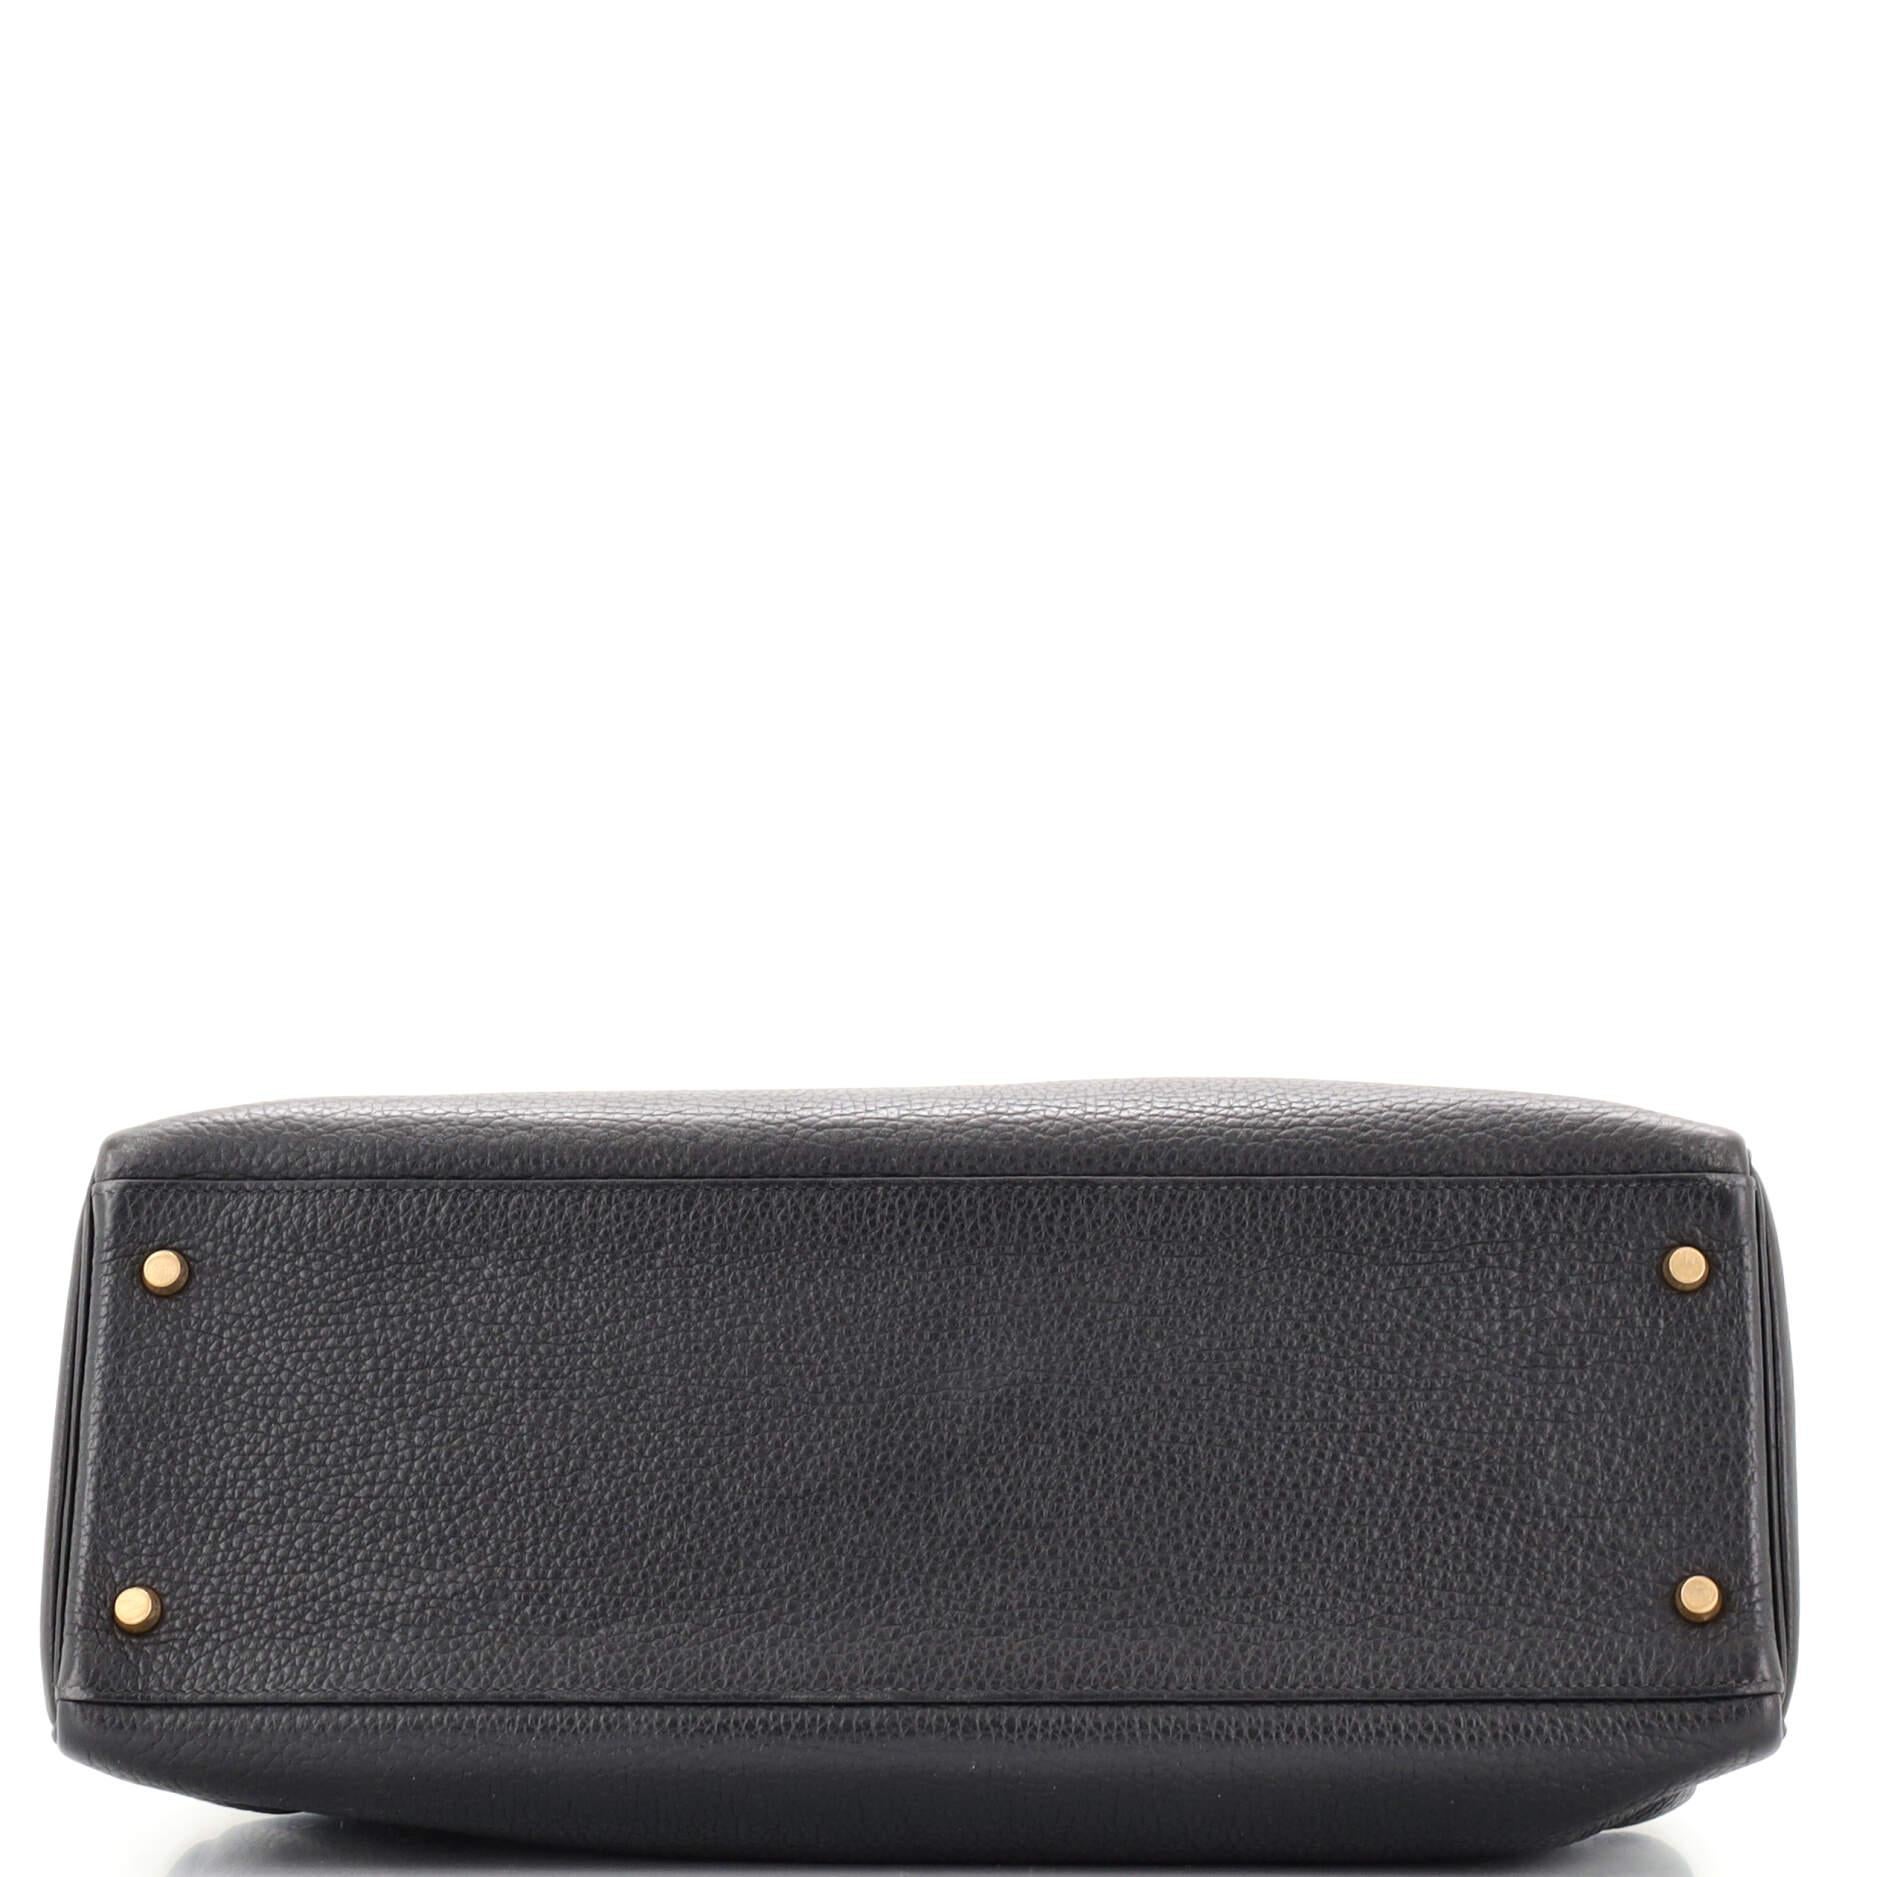 Black Hermes Kelly Handbag Noir Clemence with Gold Hardware 40